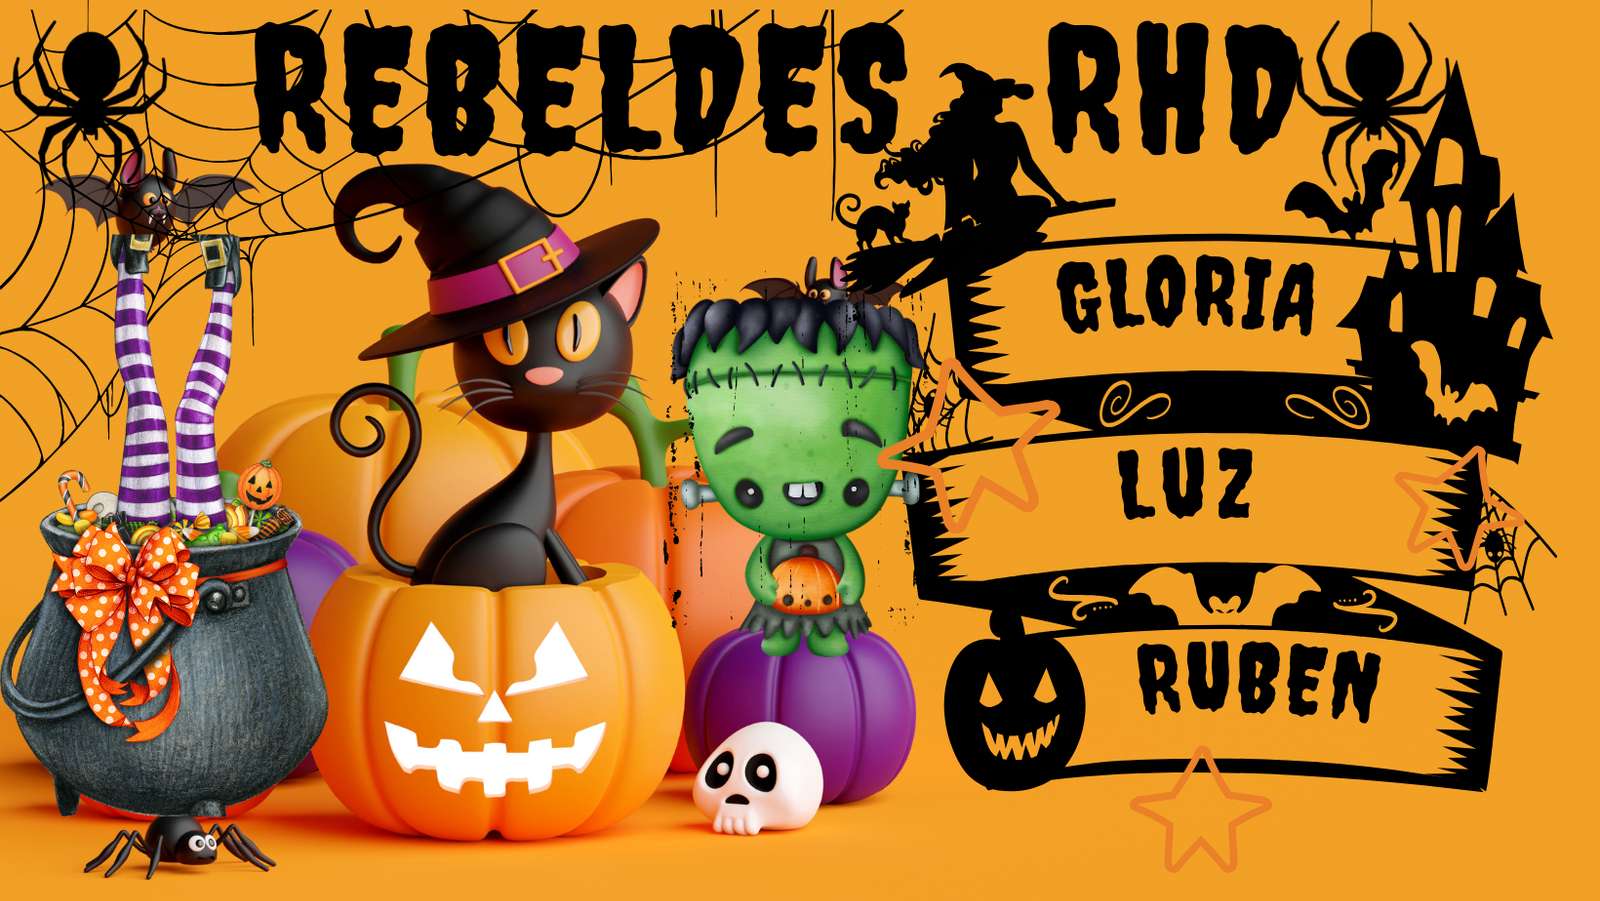 Rebellen-RHD legpuzzel online